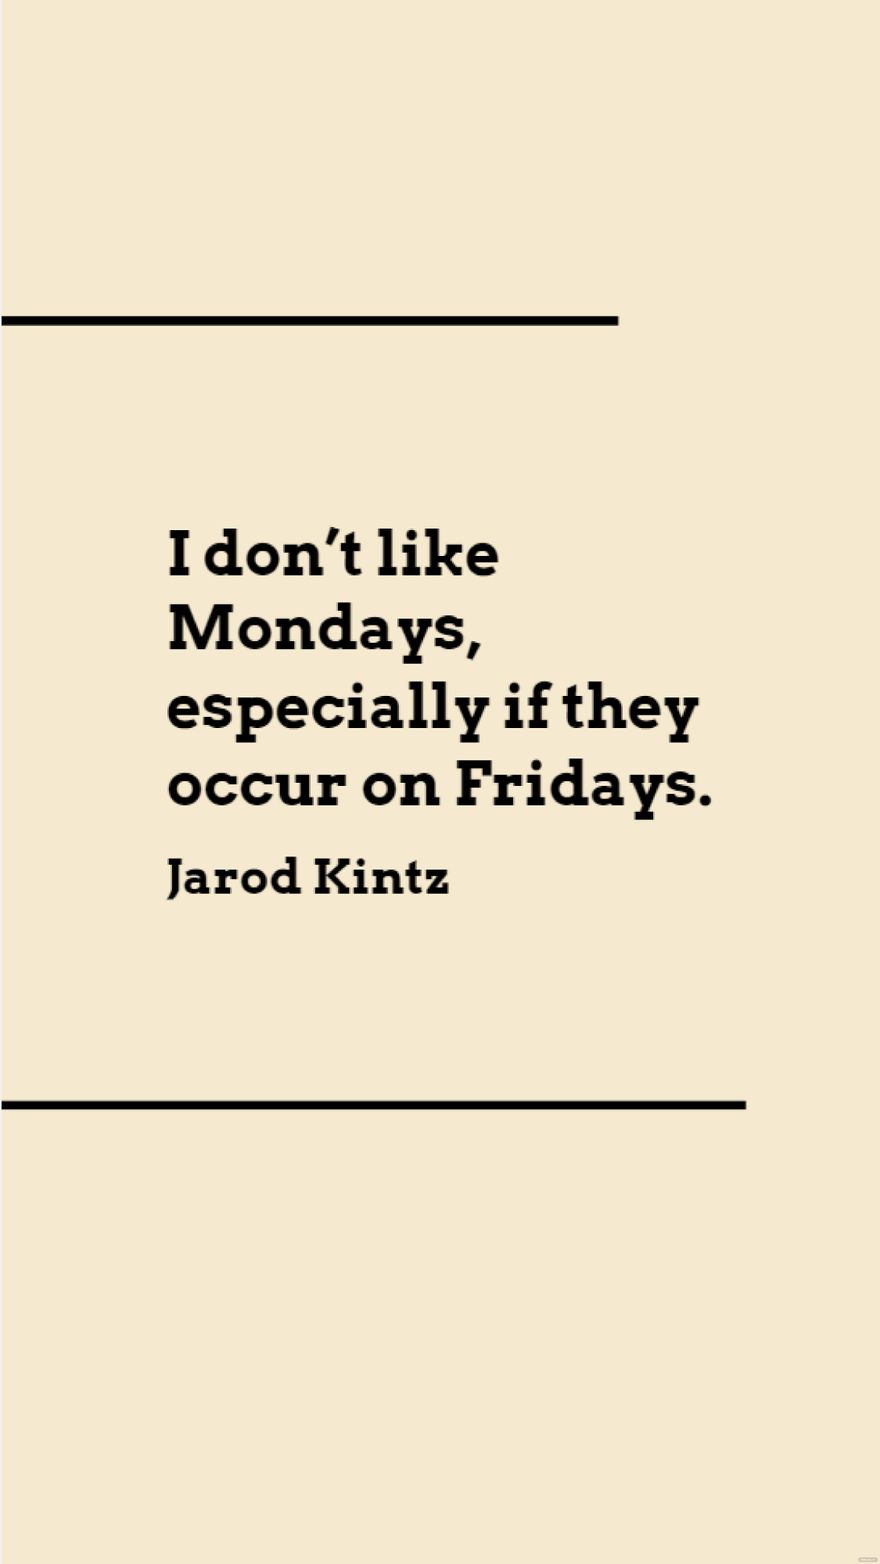 Free Jarod Kintz - I don’t like Mondays, especially if they occur on Fridays. in JPG